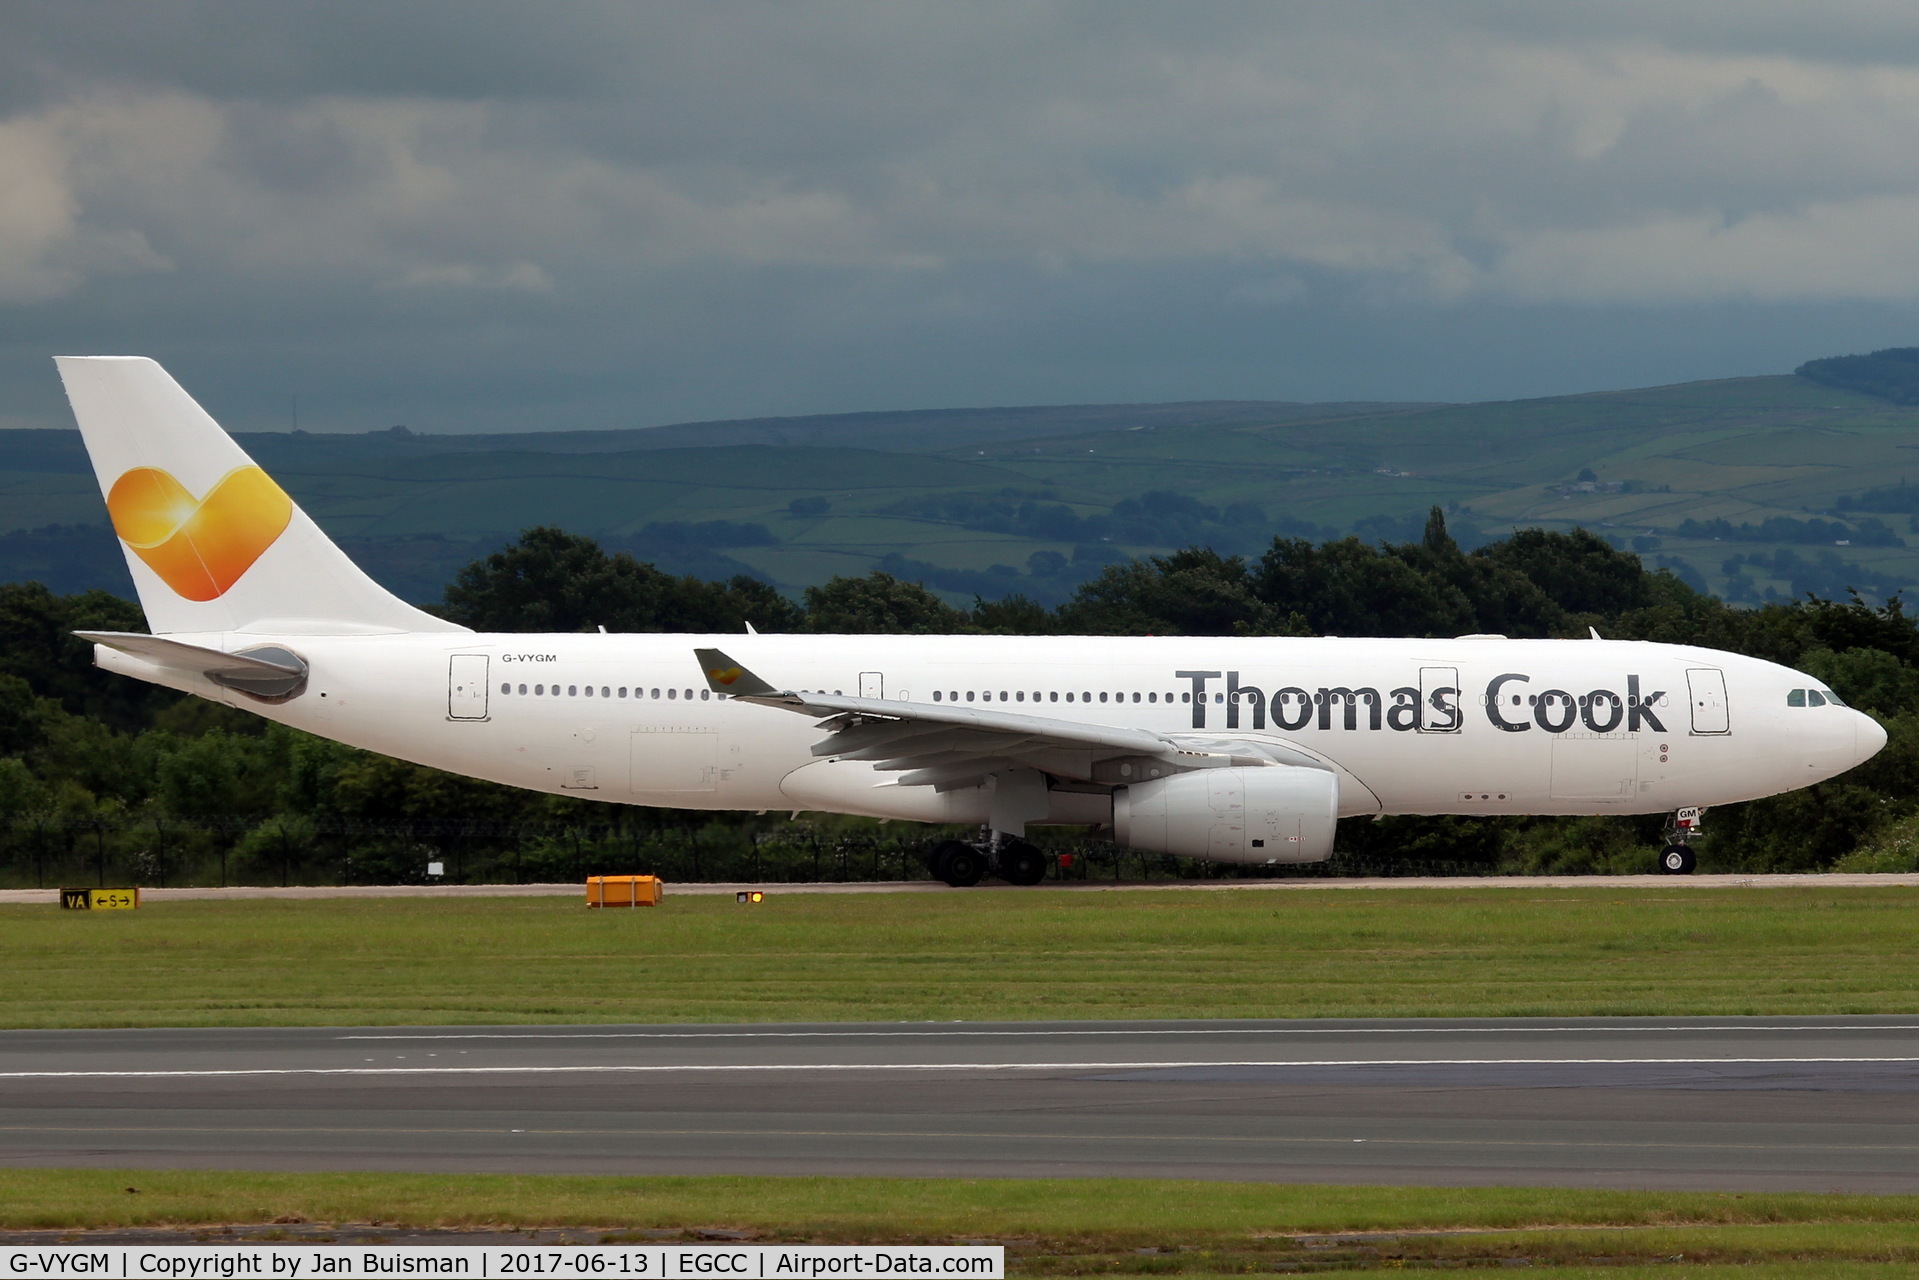 G-VYGM, 2015 Airbus A330-243 C/N 1601, Thomas Cook